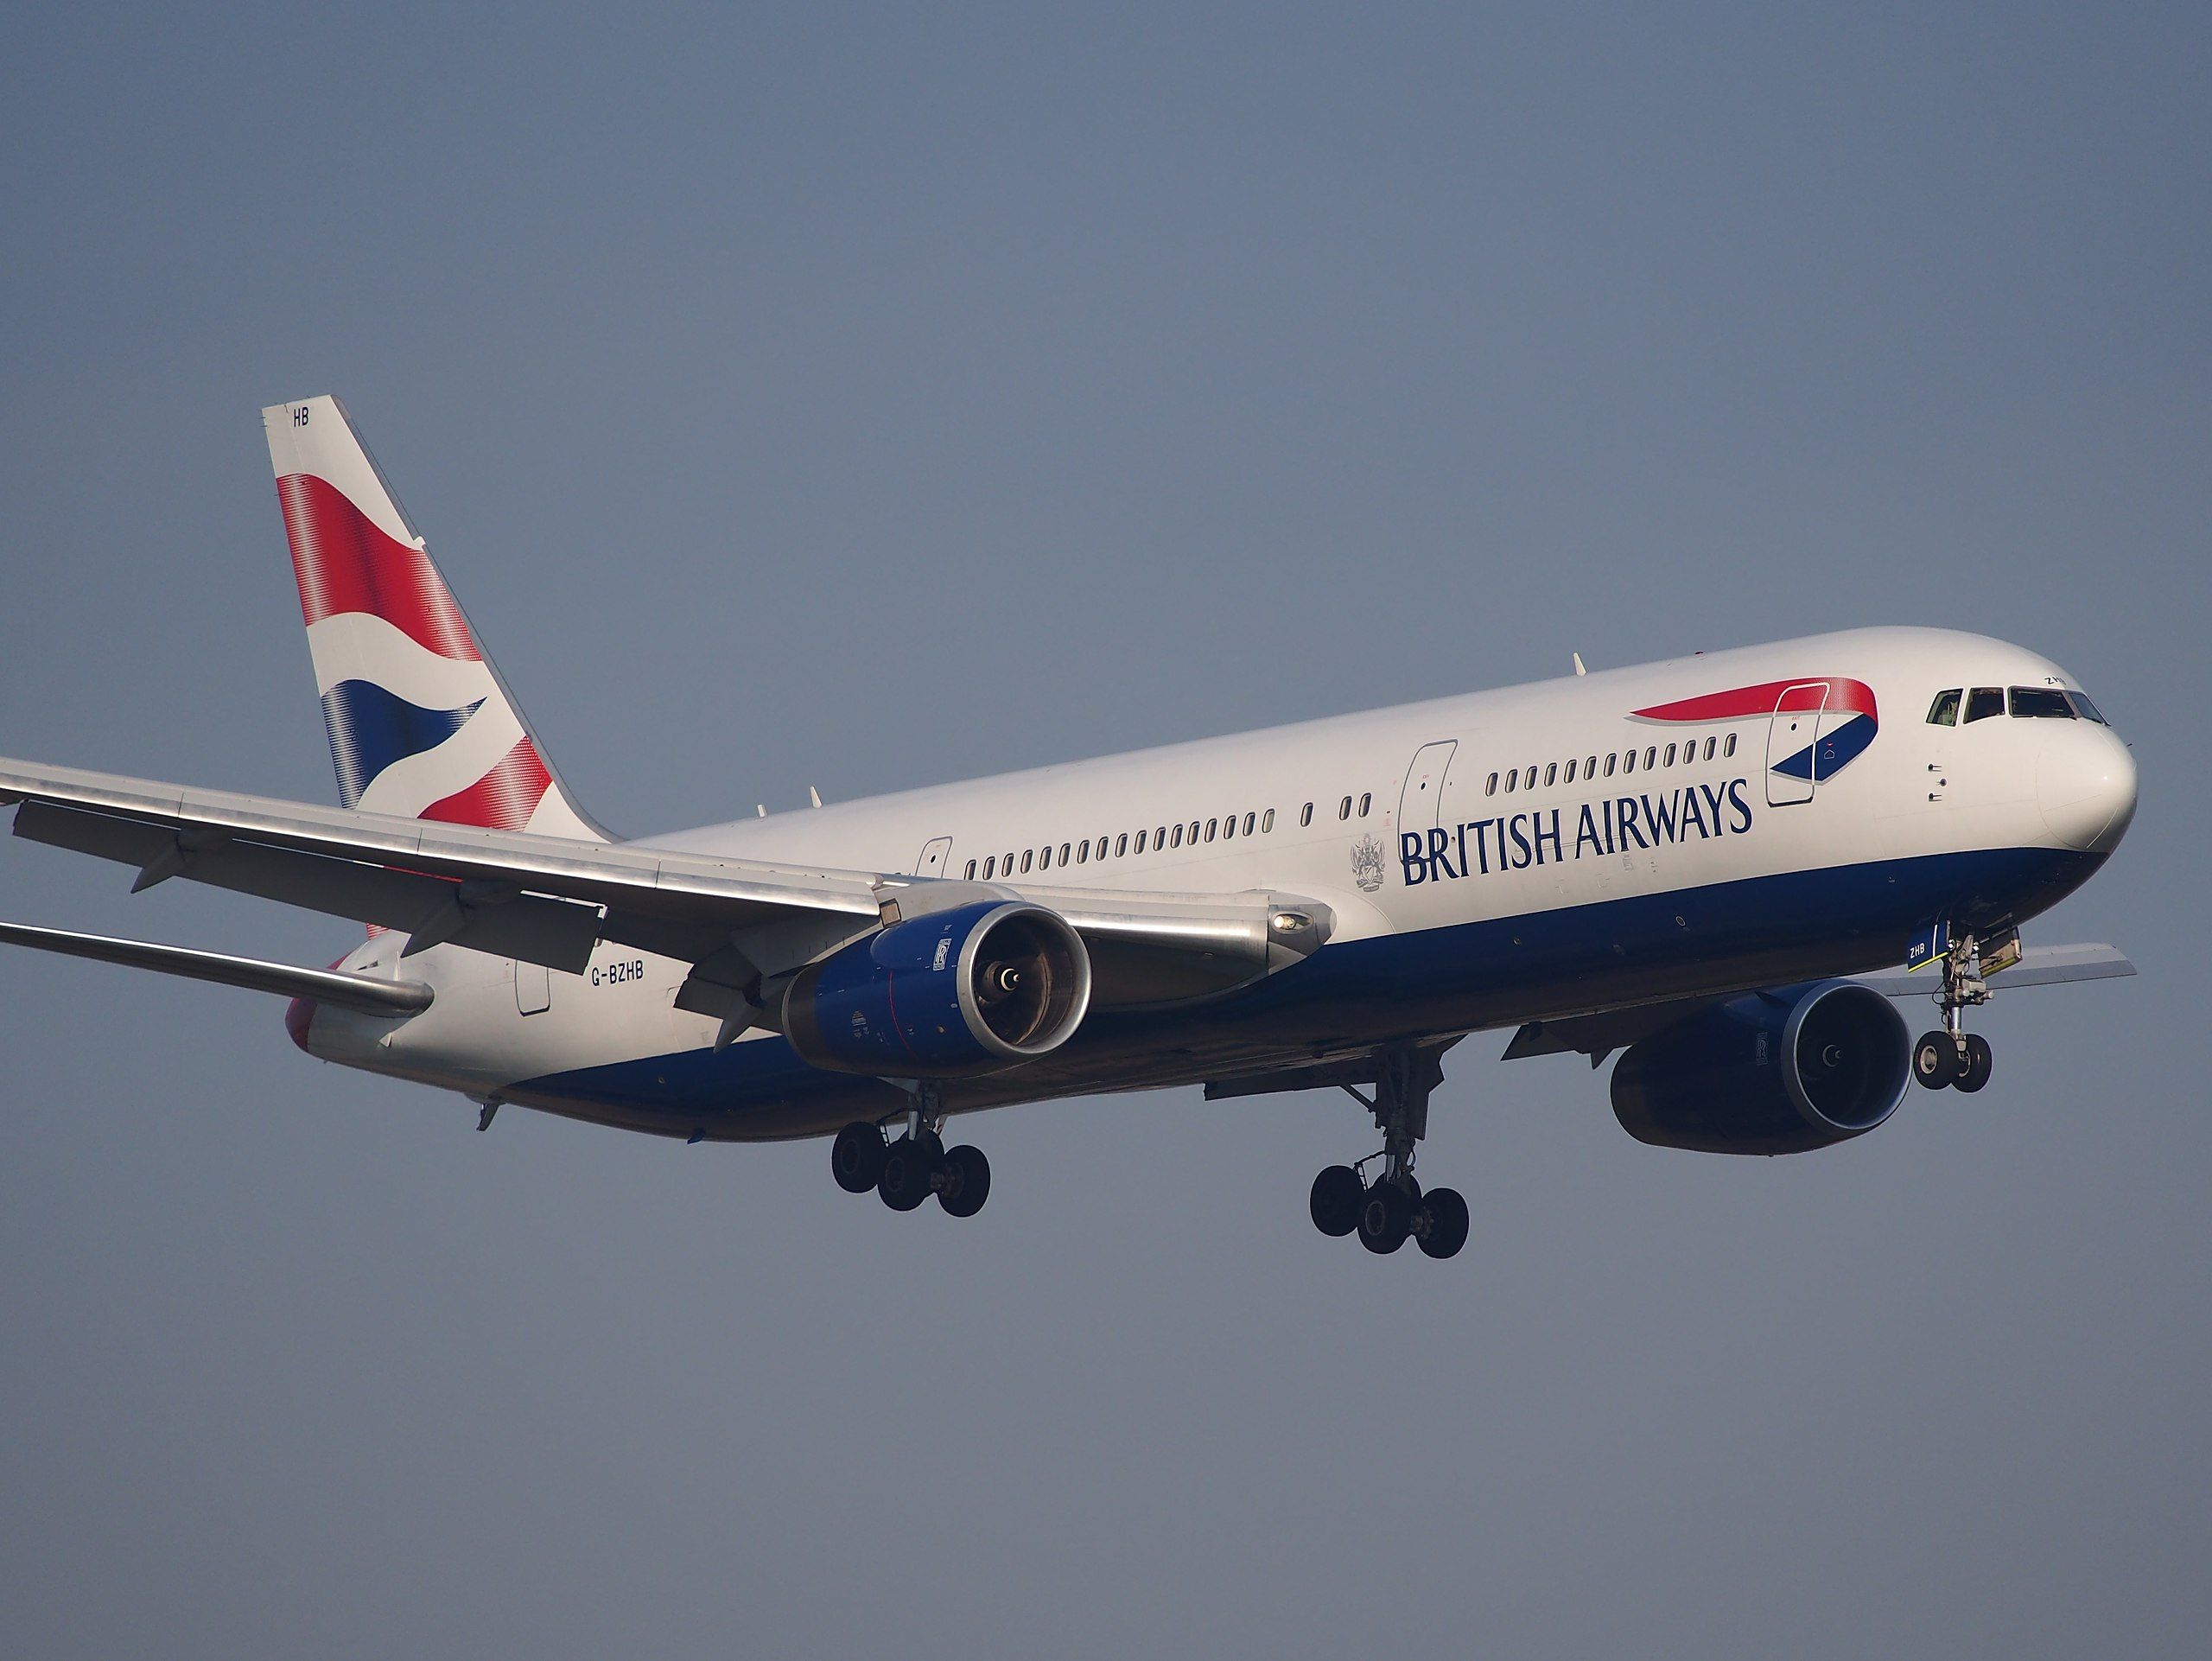 Where British Airways Fly The Boeing 767?